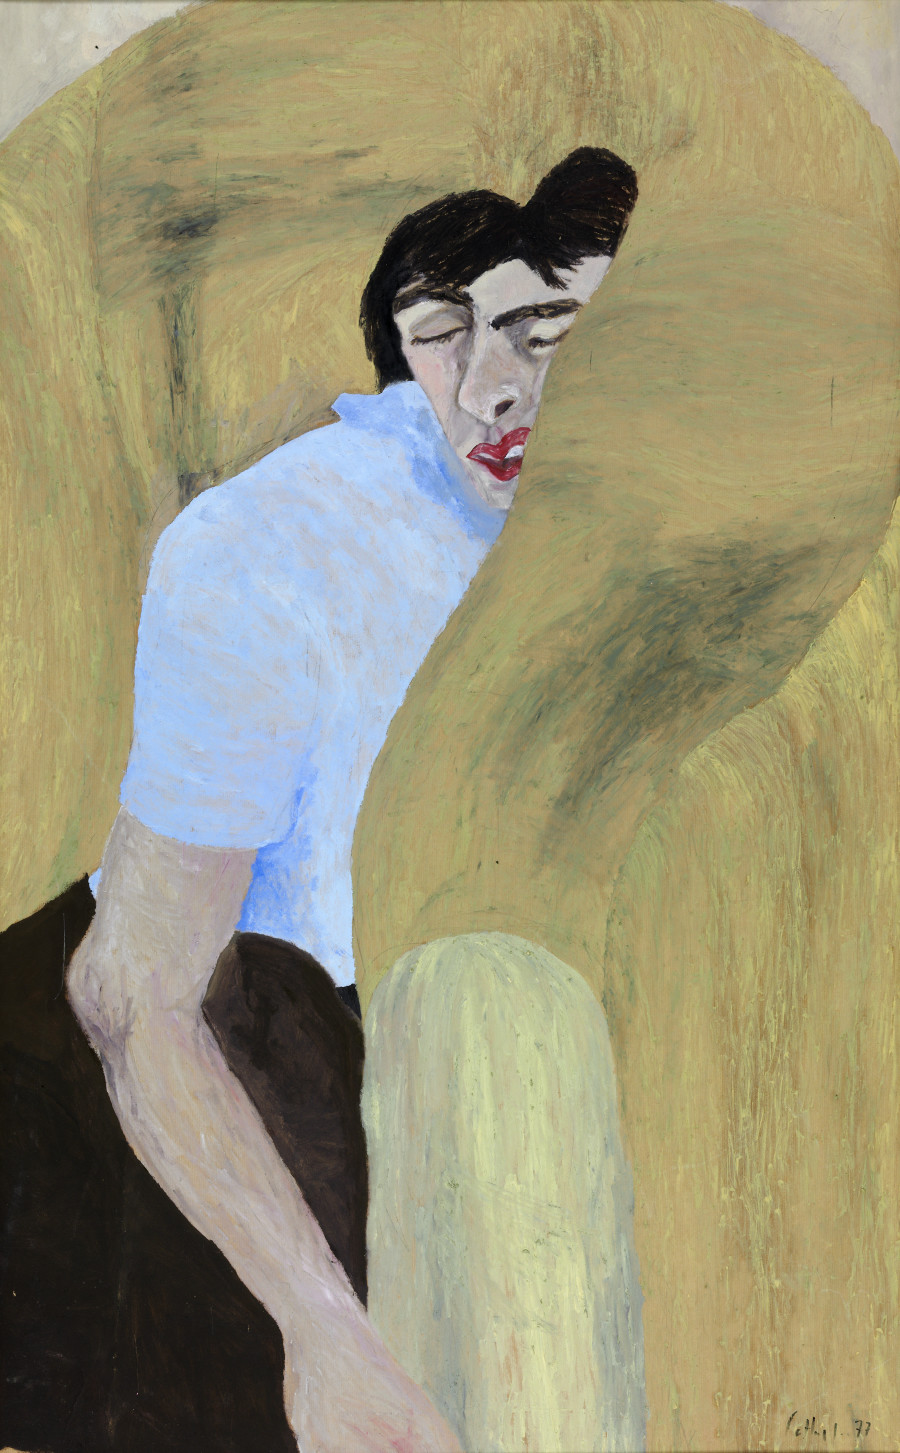 Cathy Josefowitz, Portrait de Romain, 1977, 158 x 98 cm, Kohle, Pastellkreide und Gouache auf Papier, Courtesy of Collection Pierre Sebaste Josefowitz